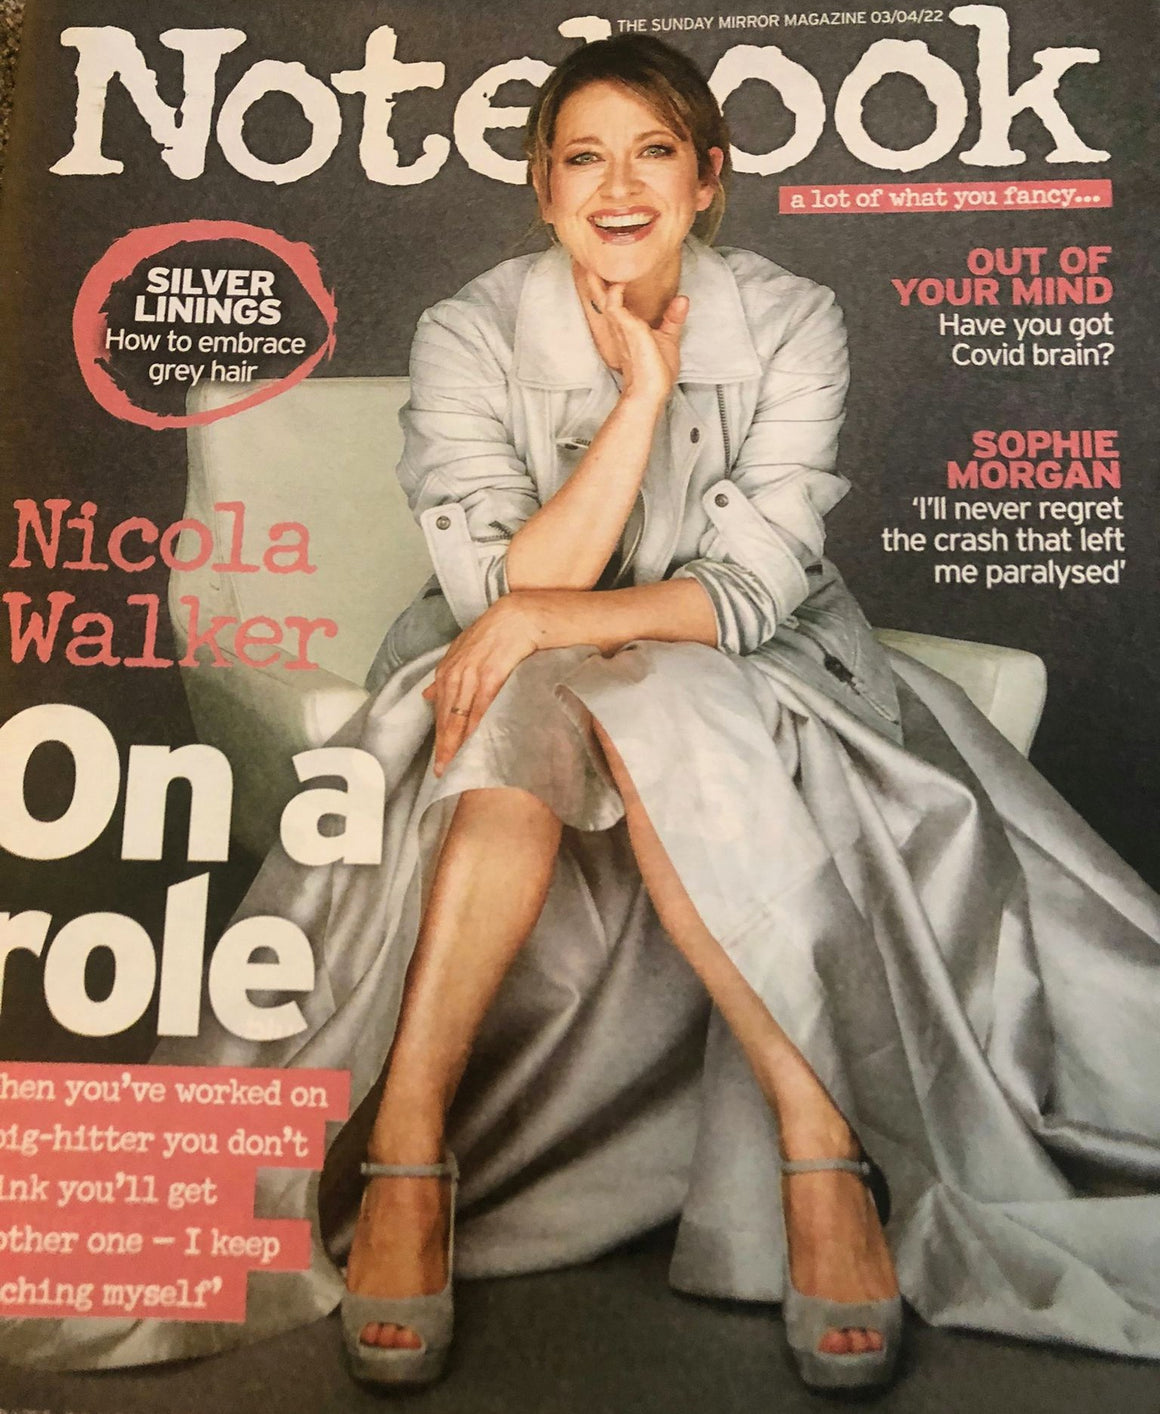 NOTEBOOK Magazine 03/04/2022 NICOLA WALKER COVER FEATURE